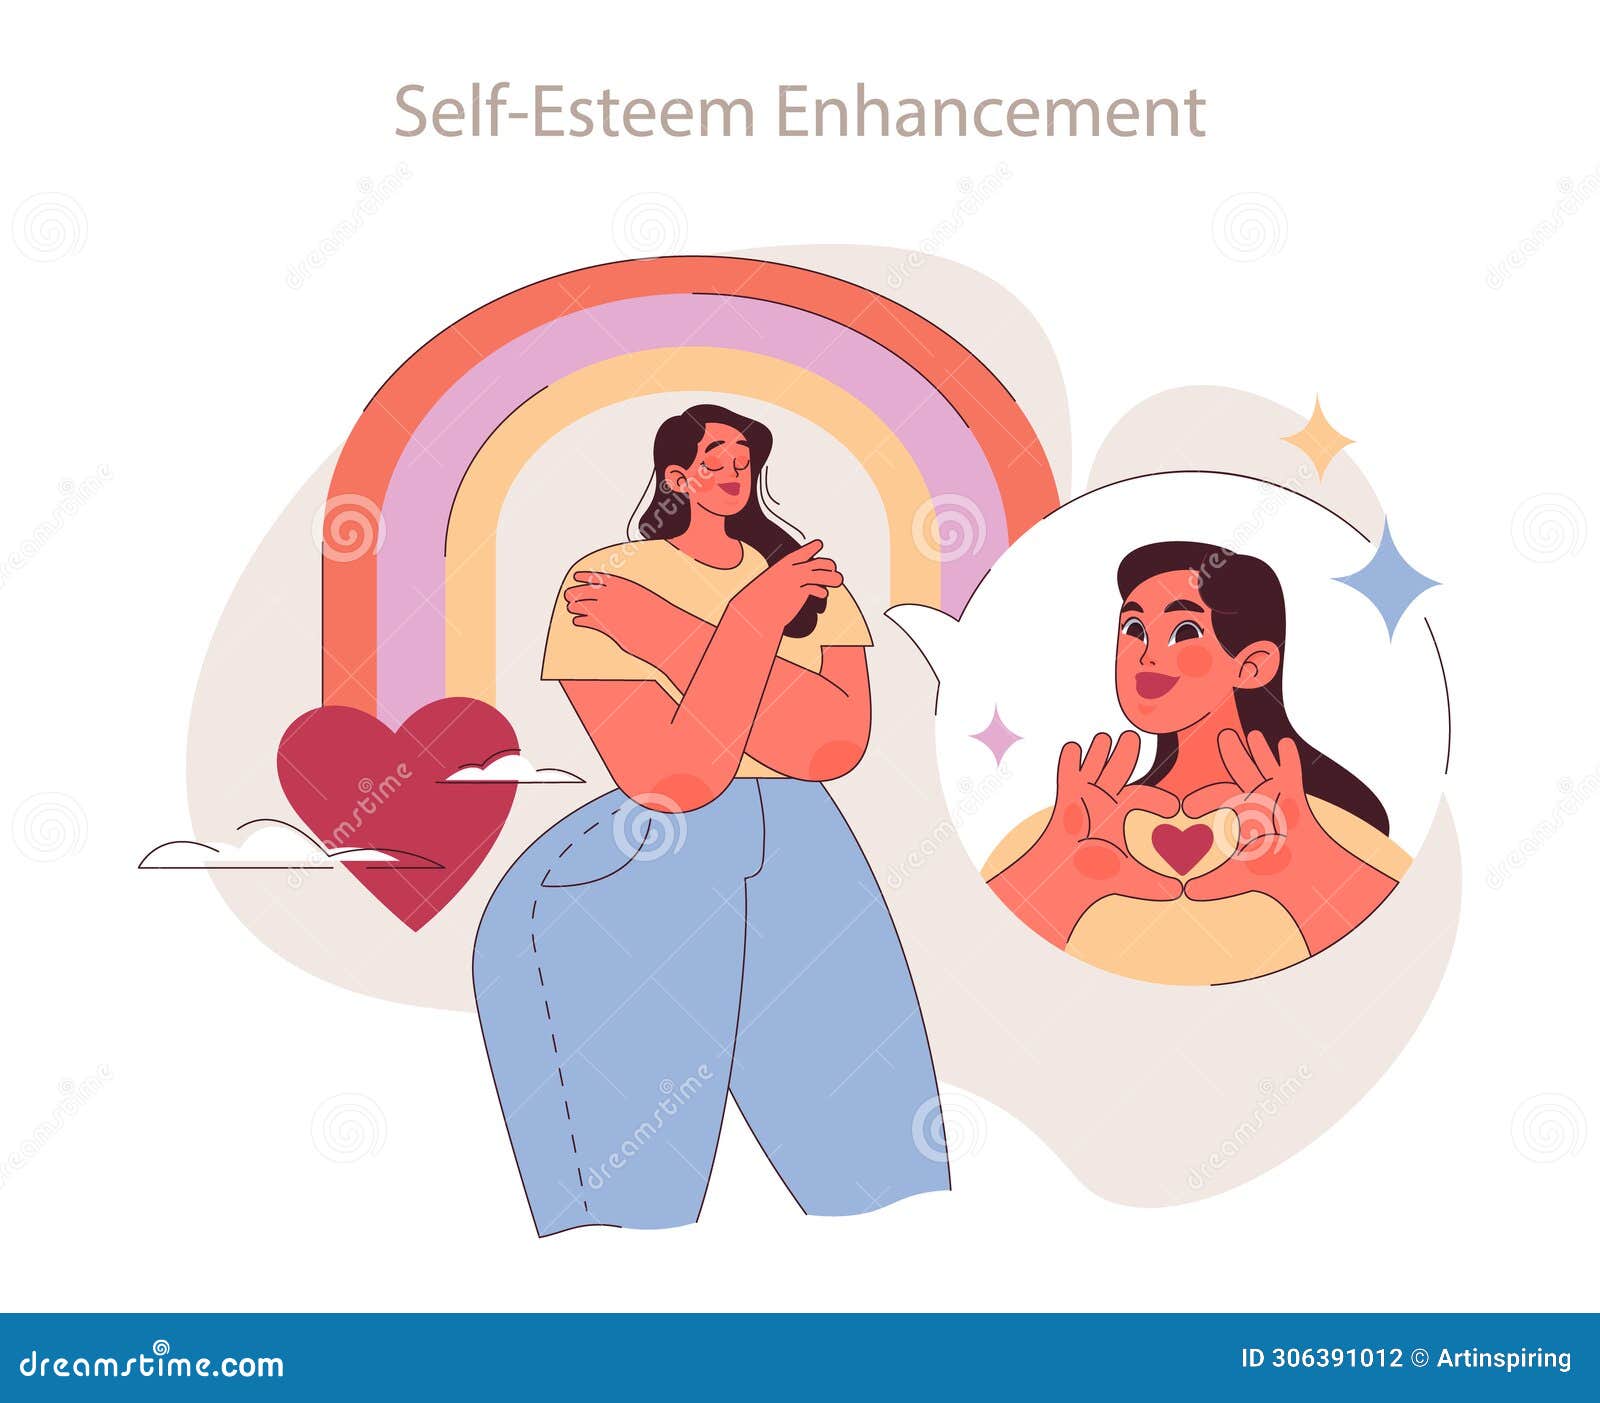 self-esteem enhancement concept.